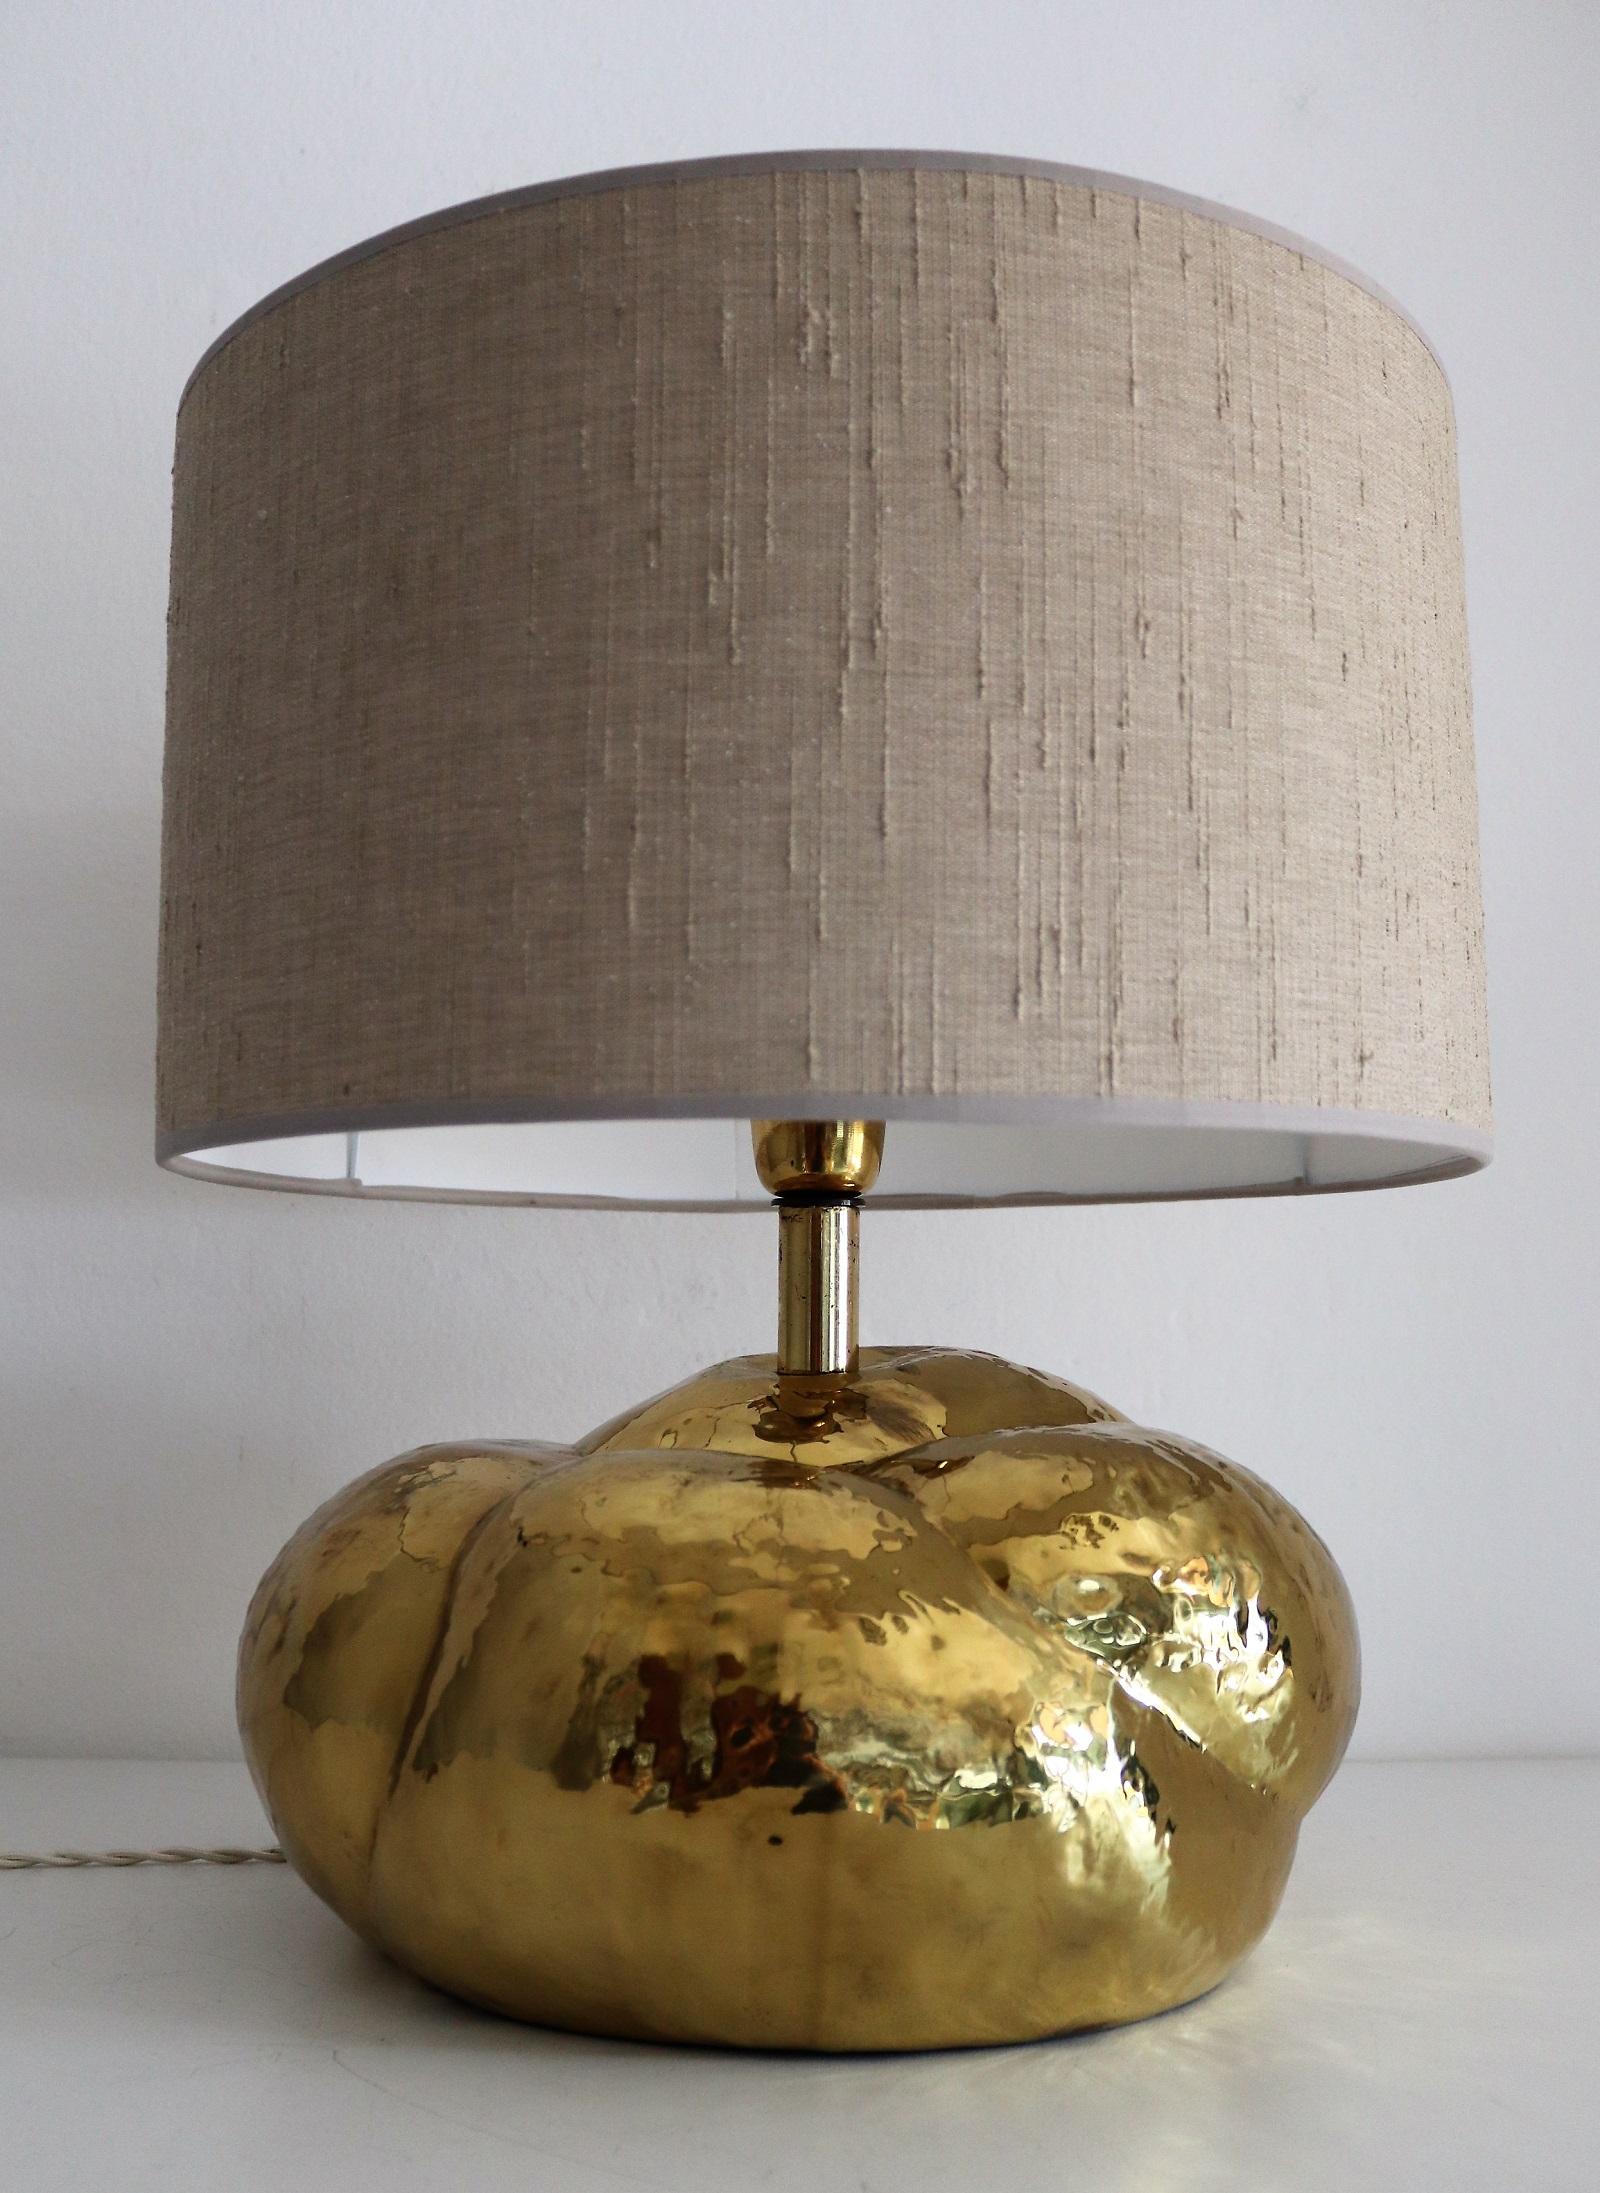 20th Century Italian Midcentury Organic Artisan Brass Table Lamp in Pumpkin Shape, 1950s